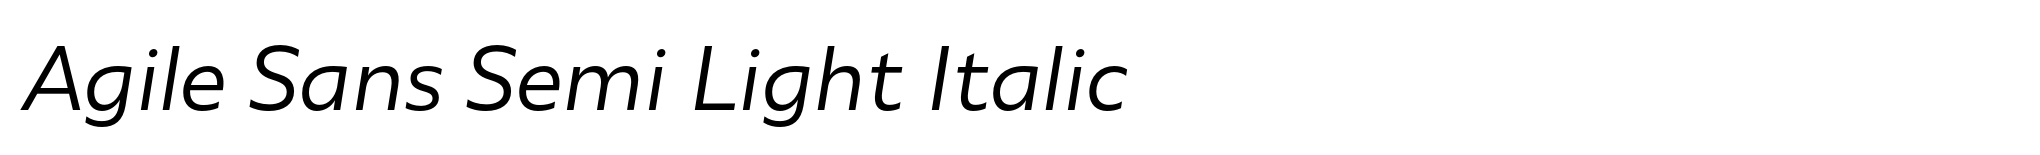 Agile Sans Semi Light Italic image